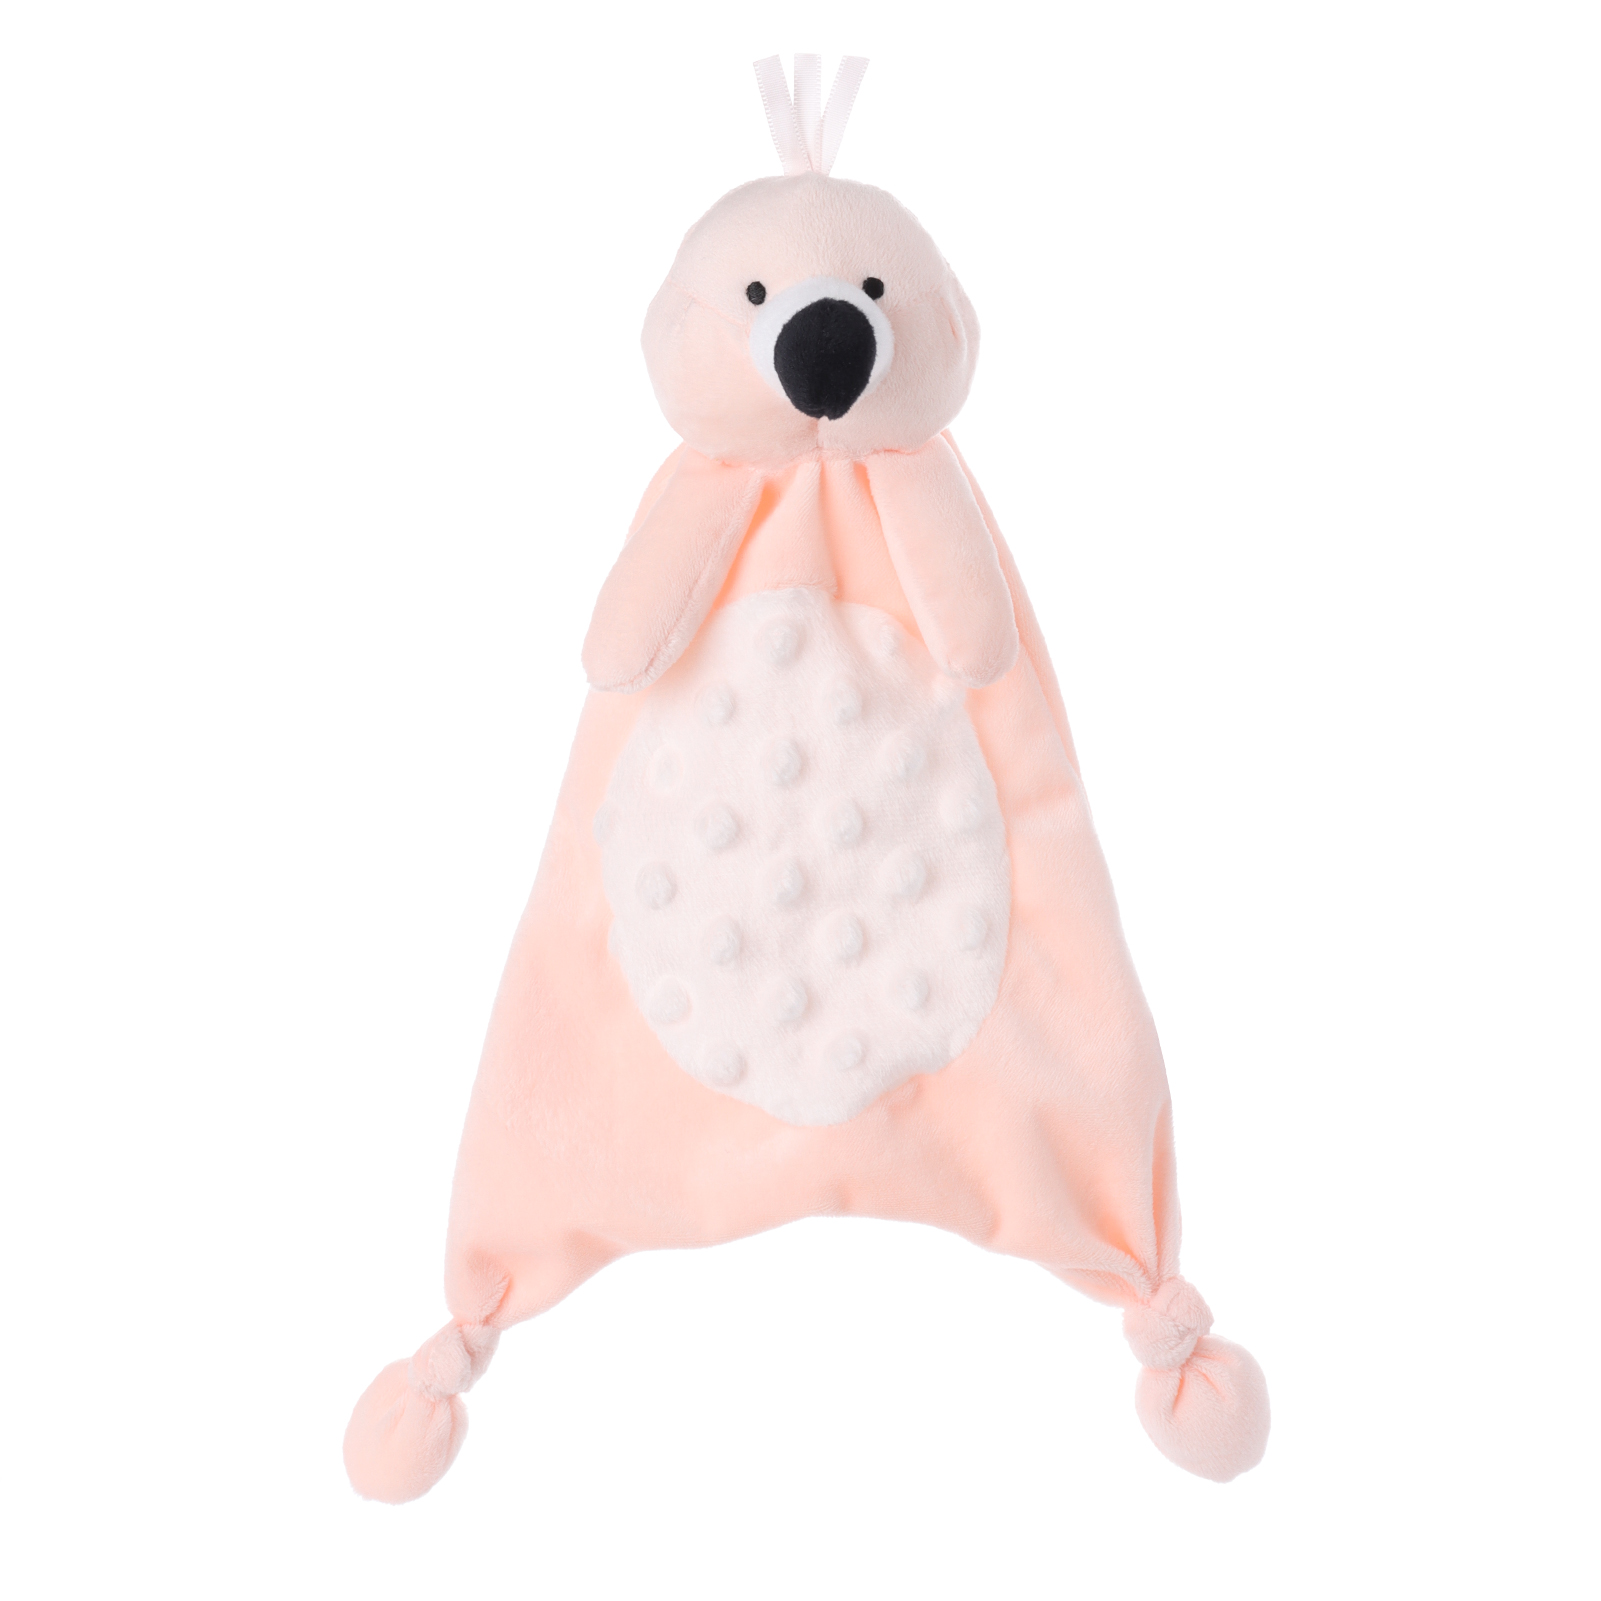 Apricot Lamb Plussh Toy Bub-Flamingo Security Blanket Baby Lovey Stuffed Animal